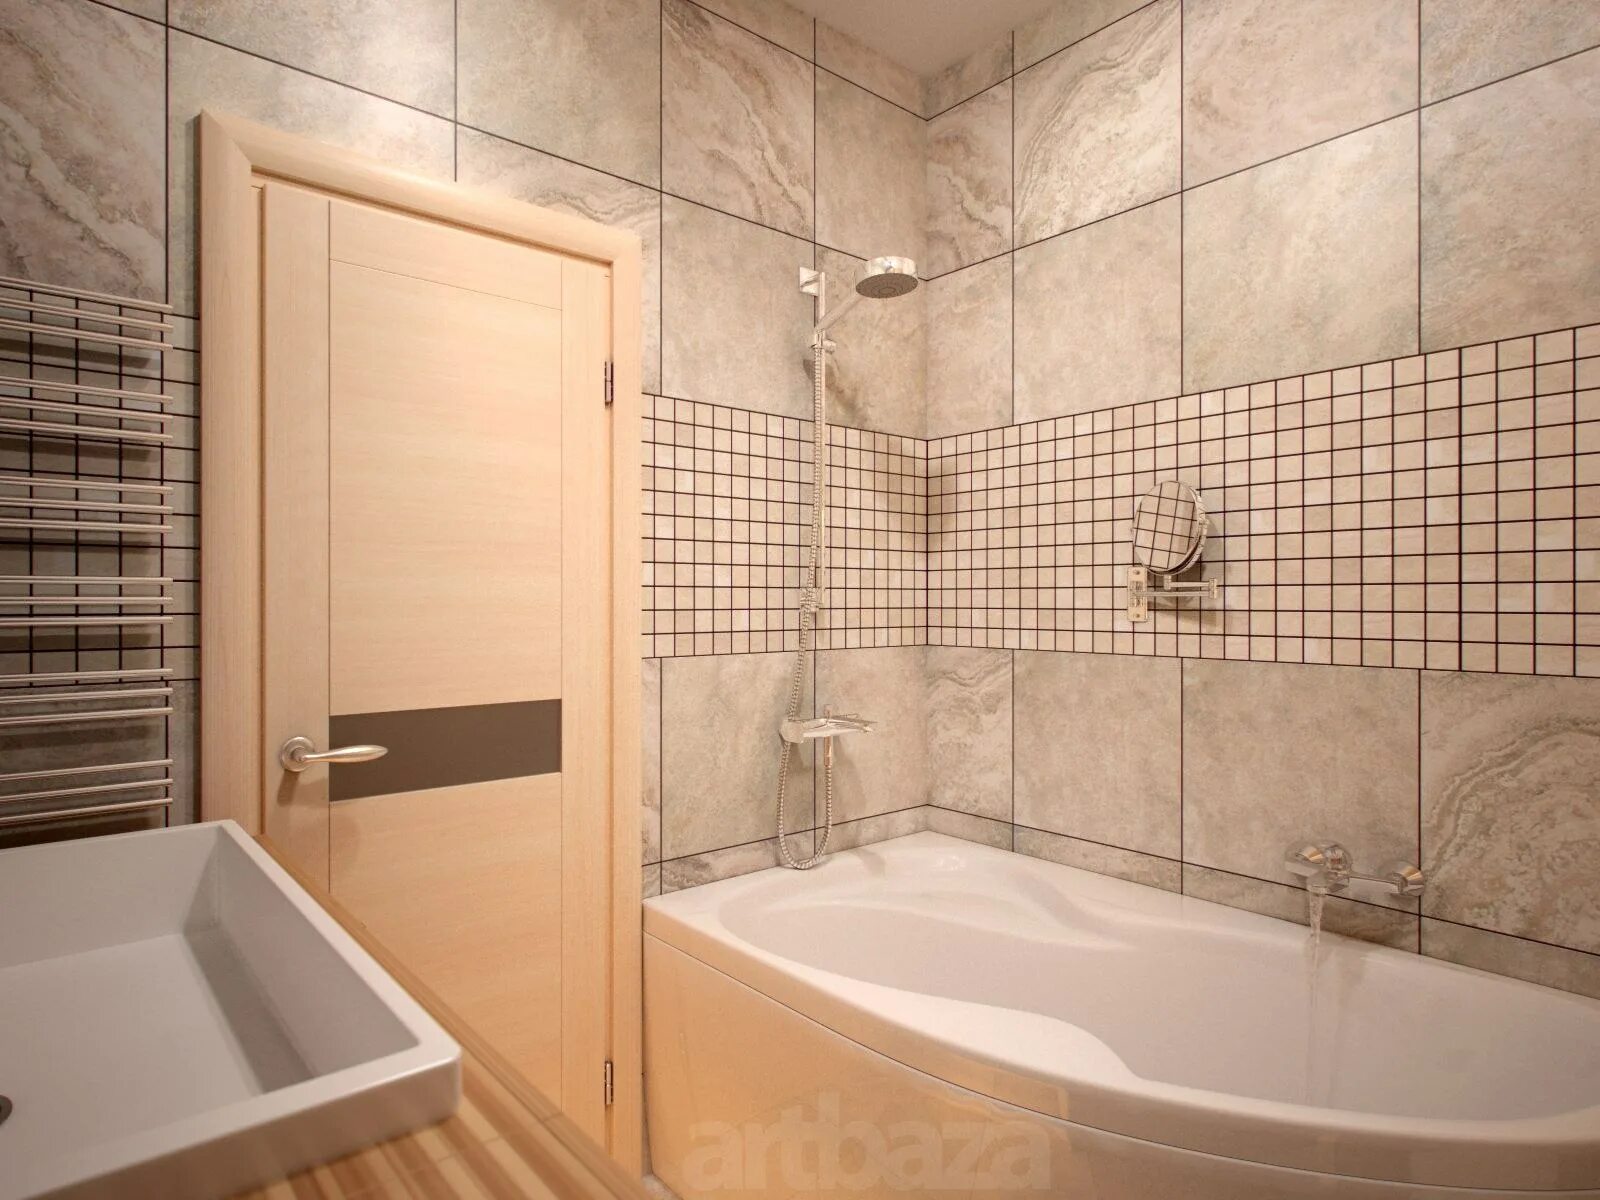 Интерьер ванной комнаты 3 кв.м. Интерьер ванной 4 кв.м. Ванная 7 квадратов. Ванная комната 3 метра.